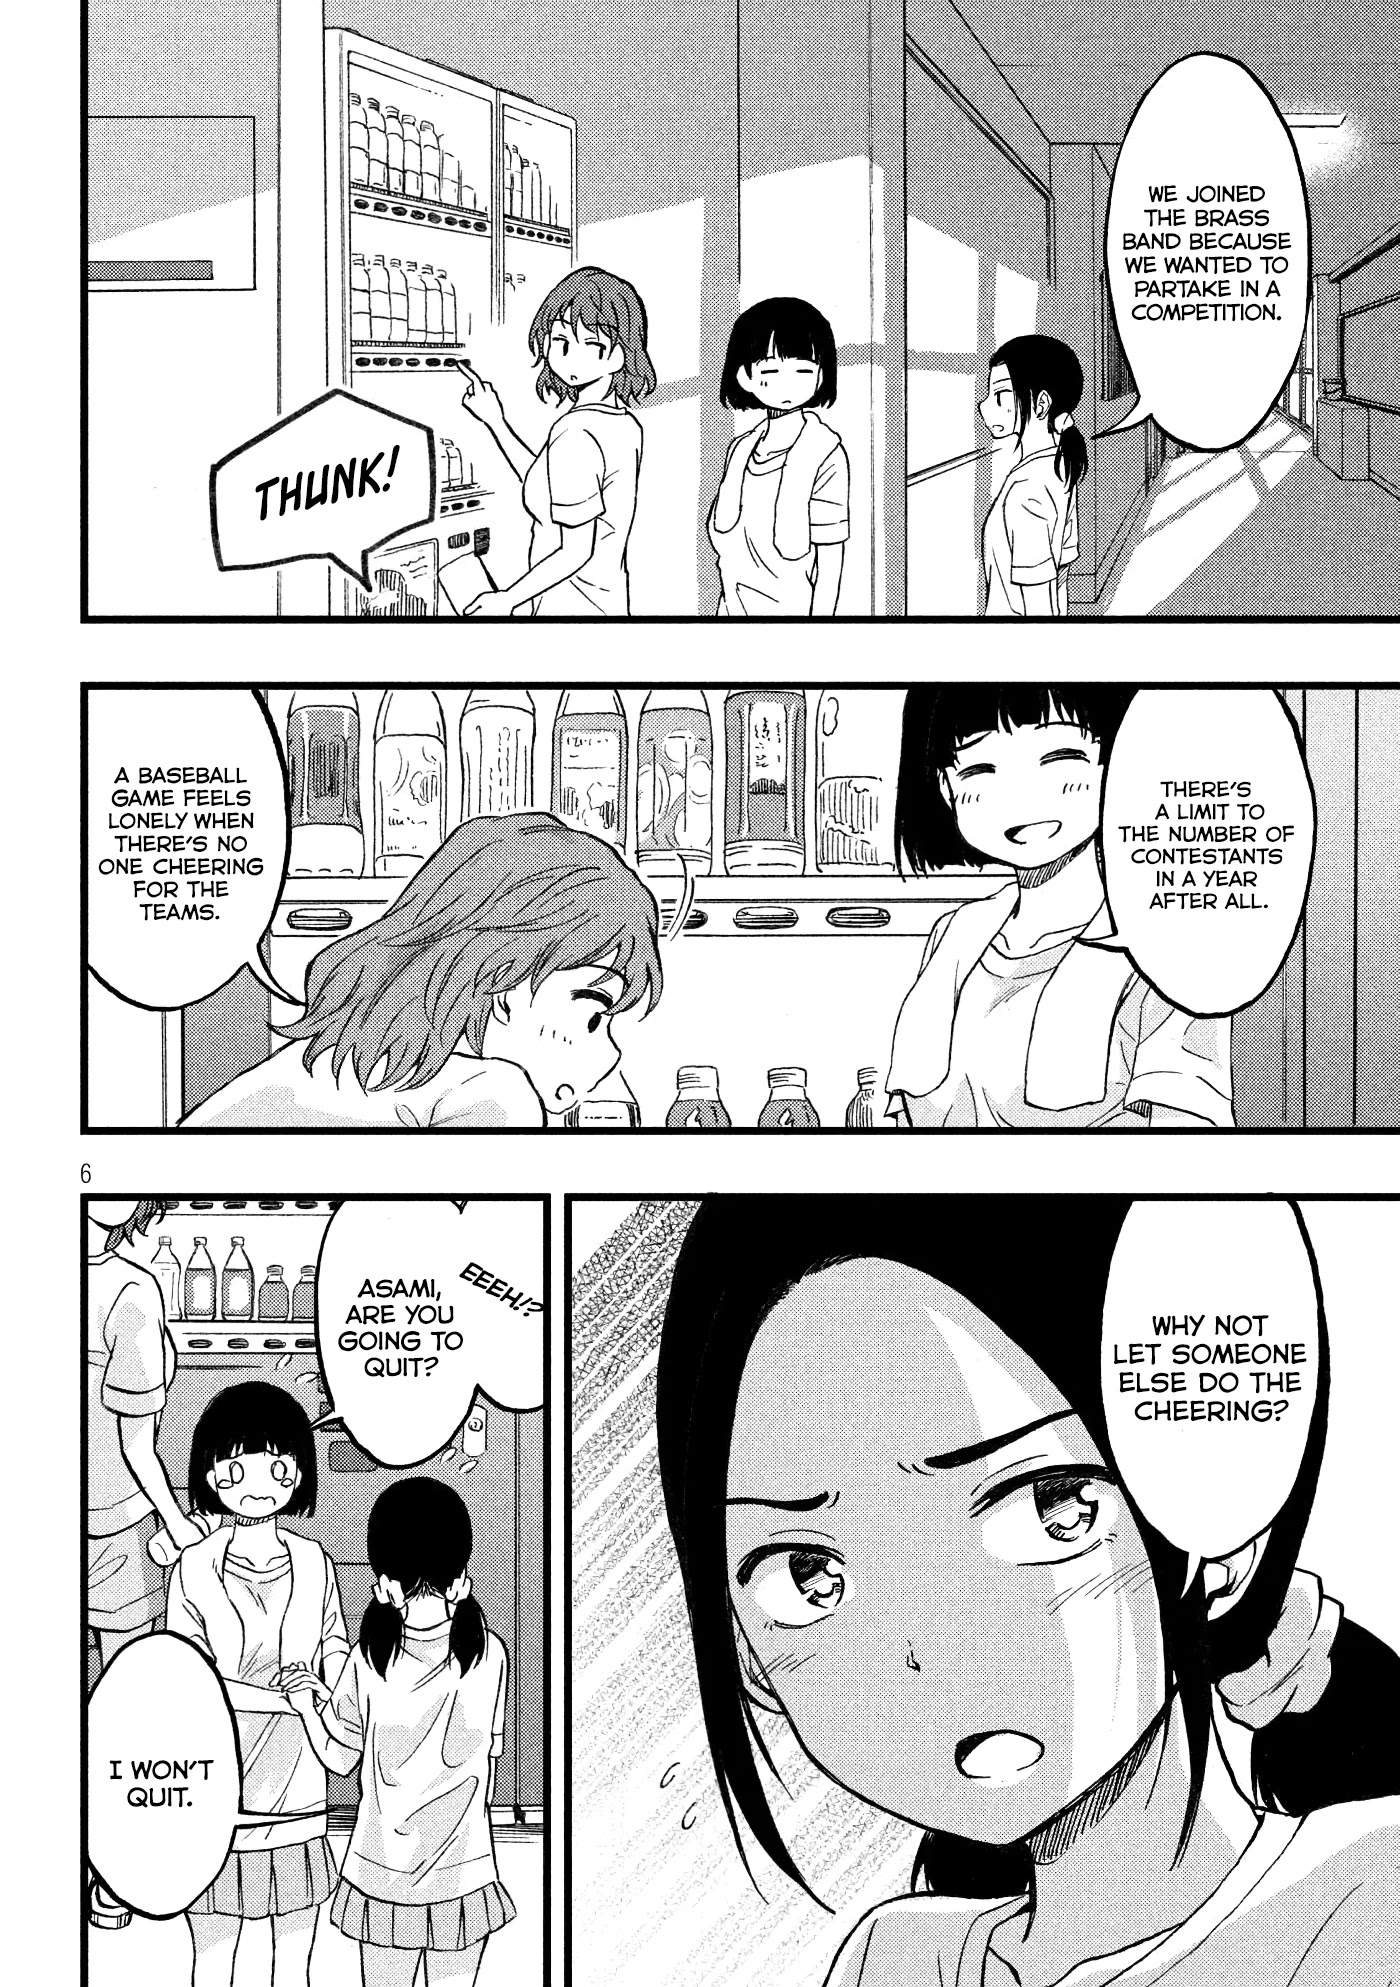 Koharu Haru! - Page 2